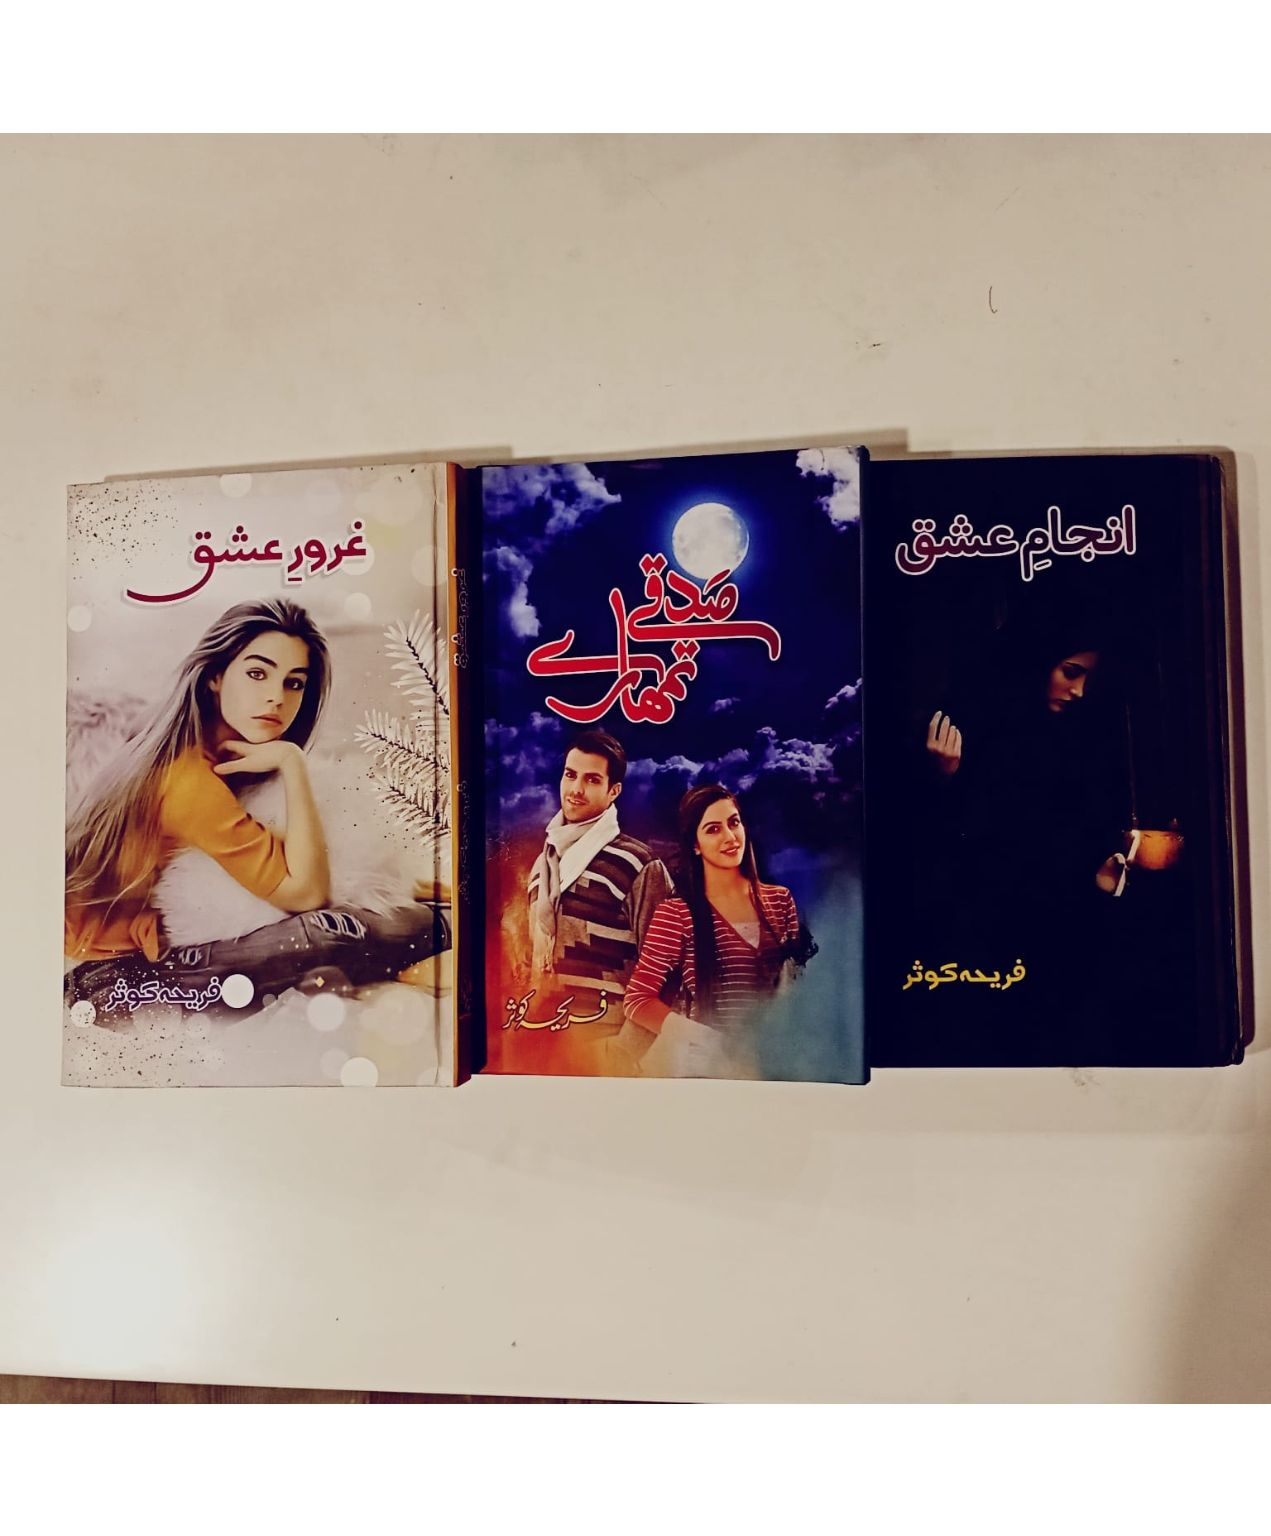 3 books (anjame ishq + sadqe tmhare + ghroor ishq) deal set